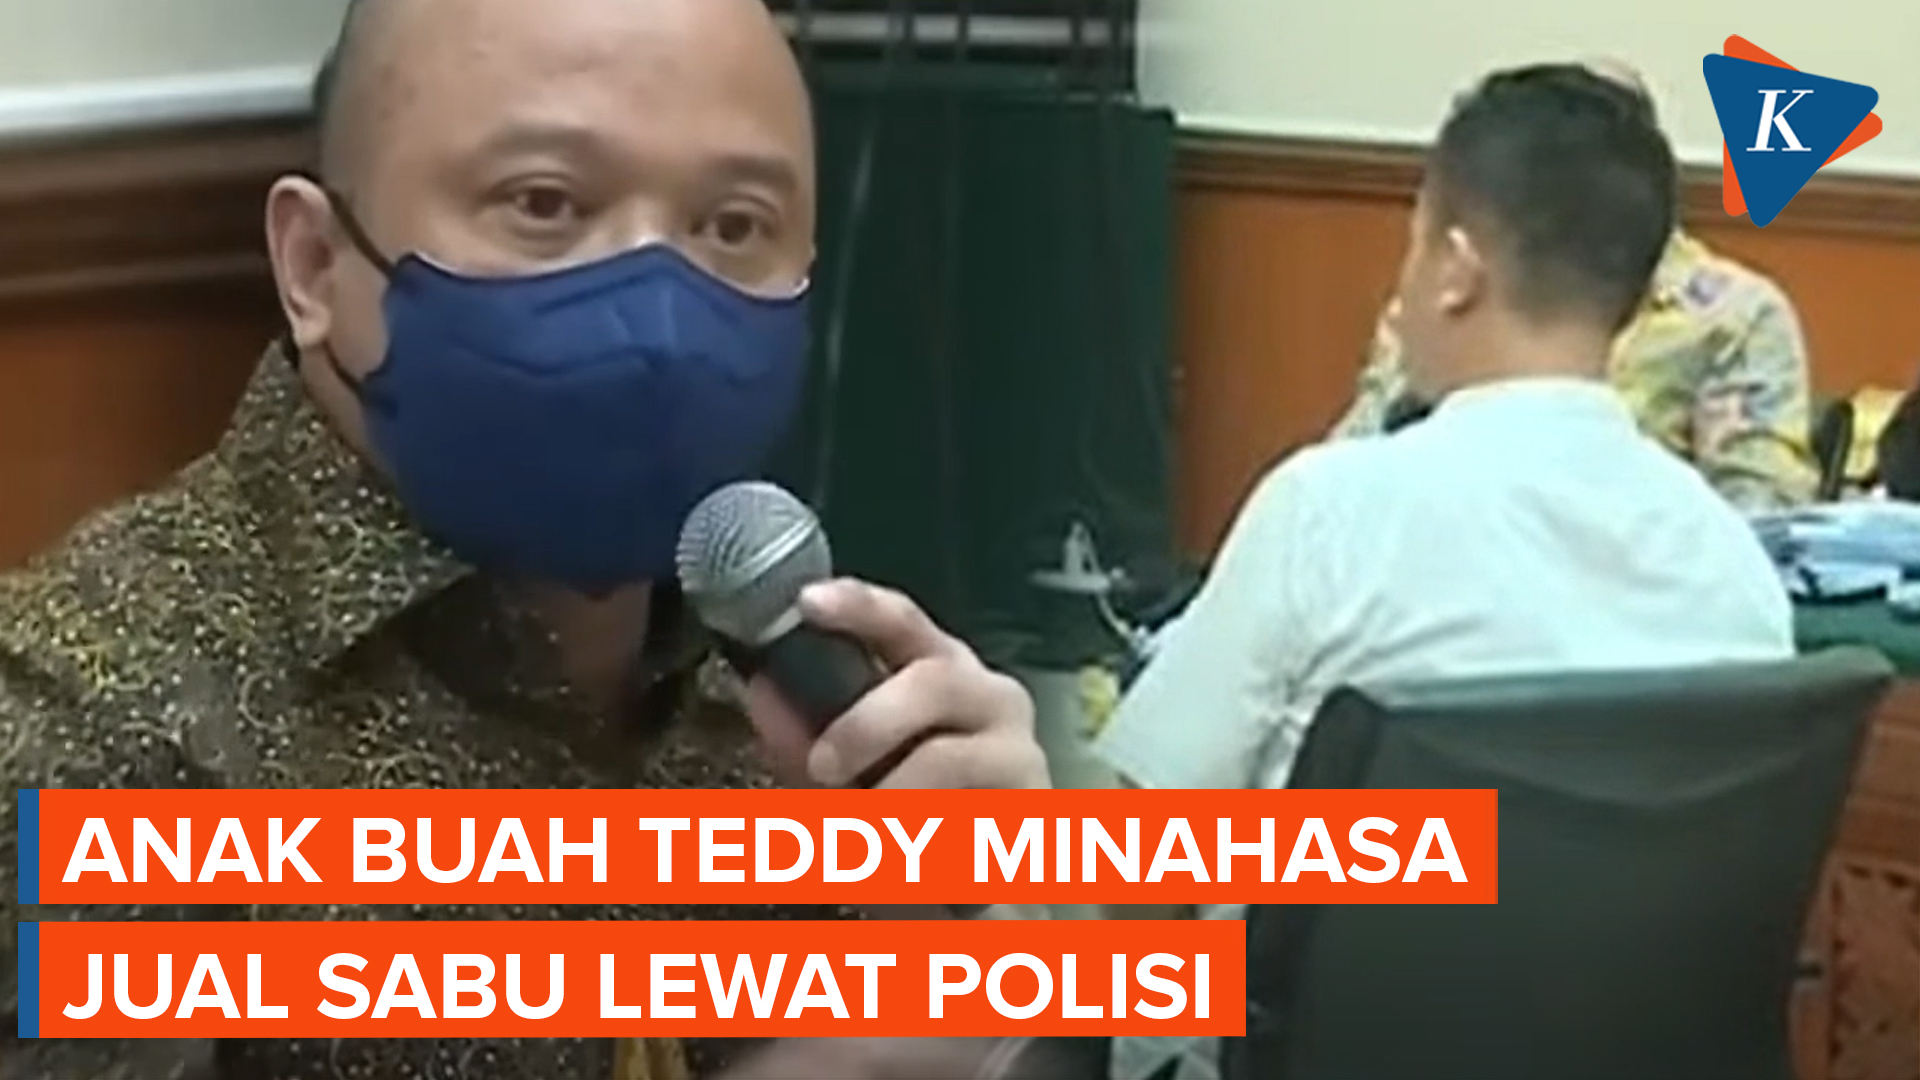 Anak Buah Teddy Minahasa Jual Sabu ke Kampung Bahari Lewat Polisi